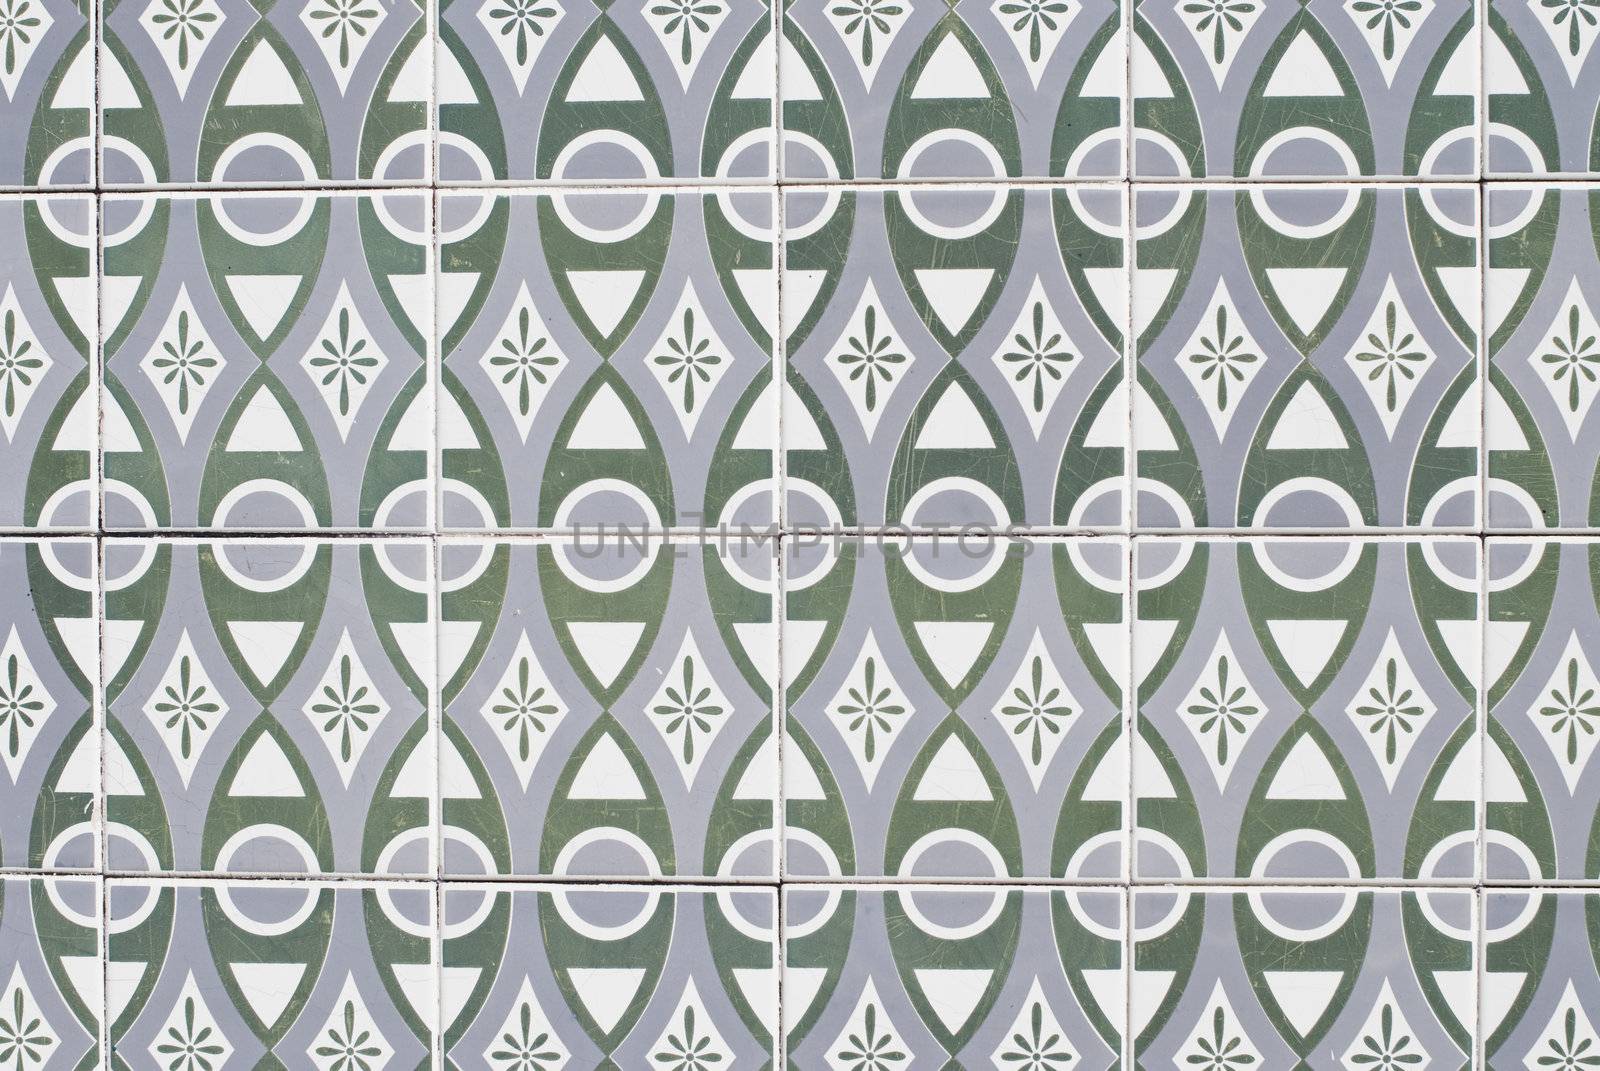 Portuguese glazed tiles 105 by homydesign